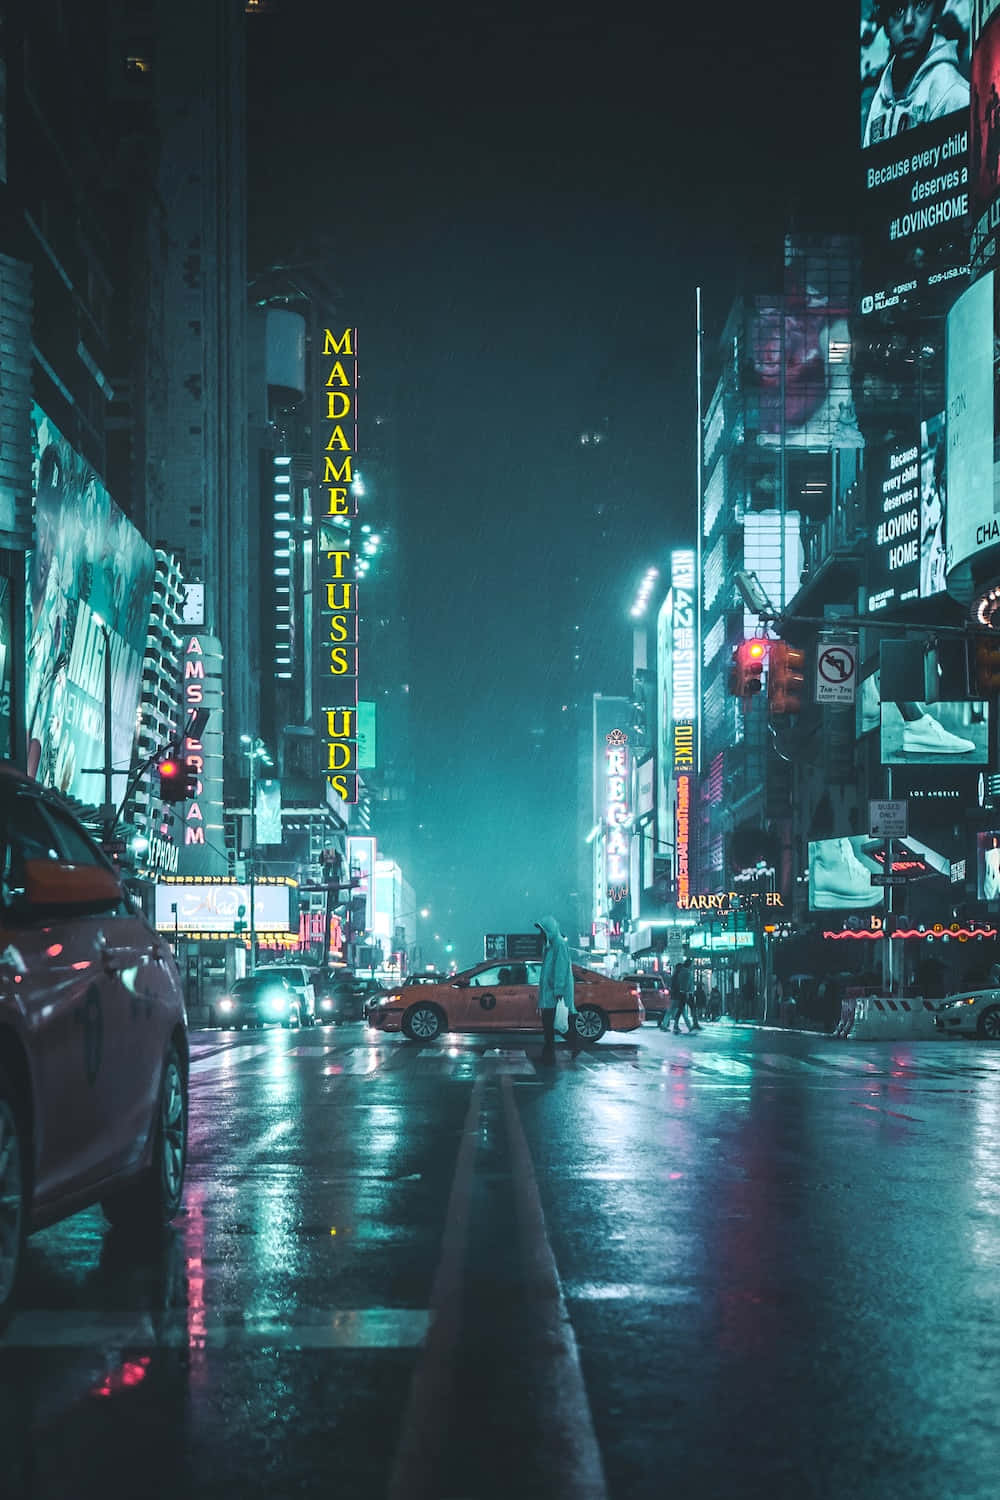 "Serene Night Street in the City"